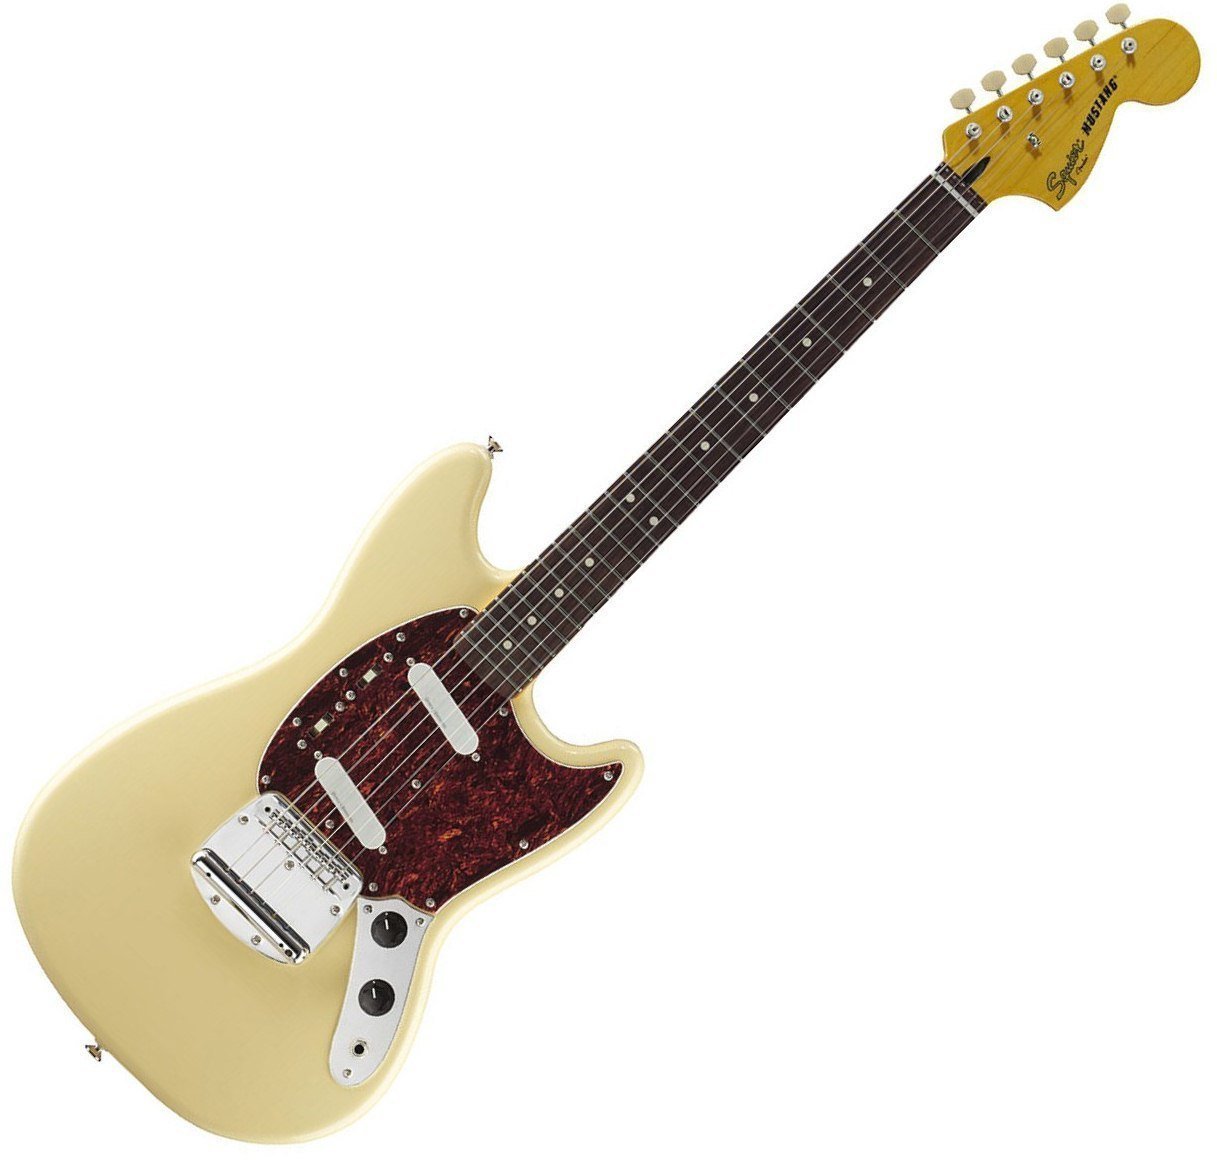 Sähkökitara Fender Squier Vintage Modified Mustang Vintage White